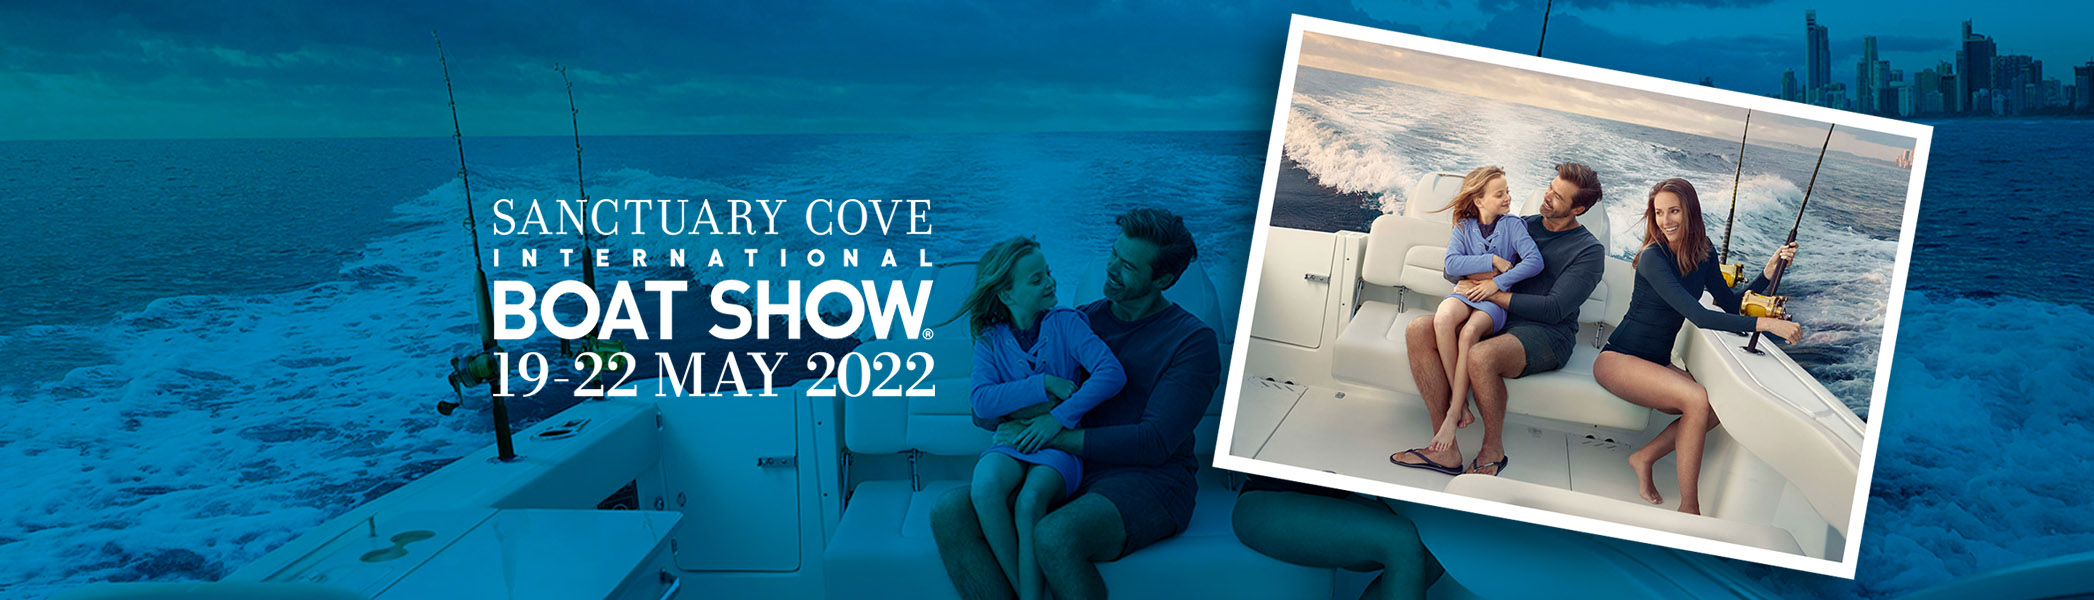 Sanctuary Cove International Boat Show 2022